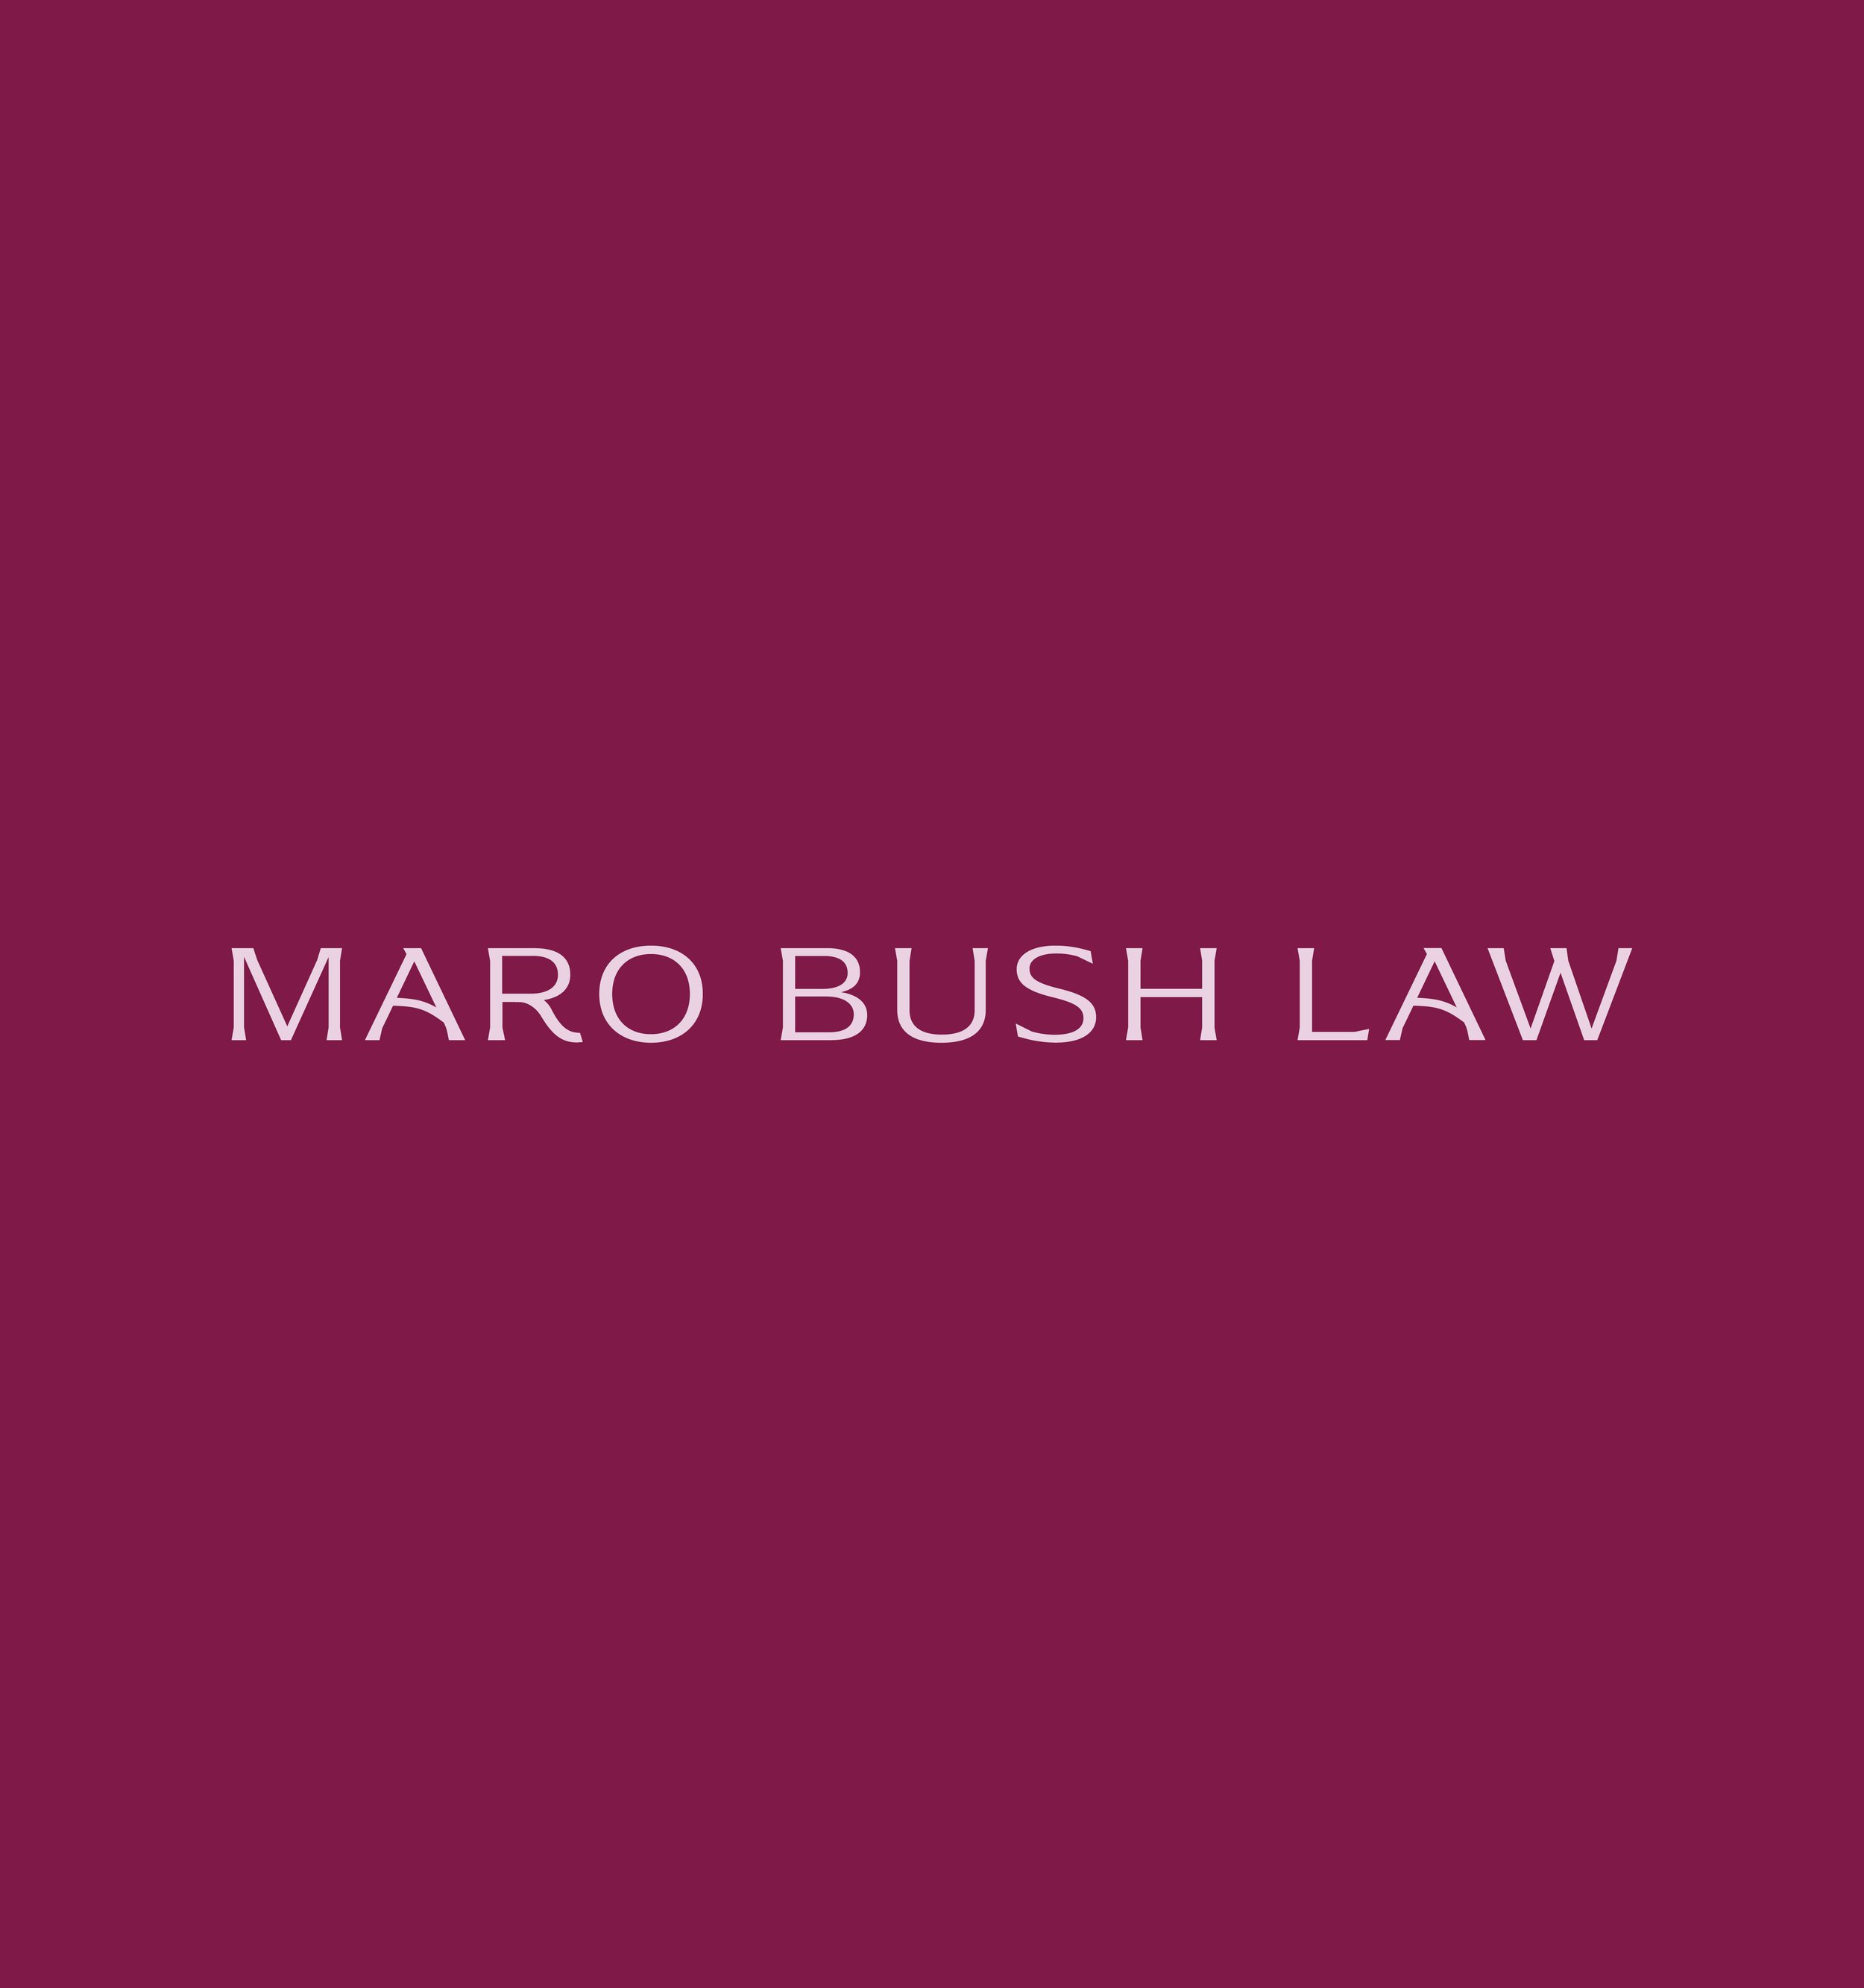 Maro Bush Law Branding